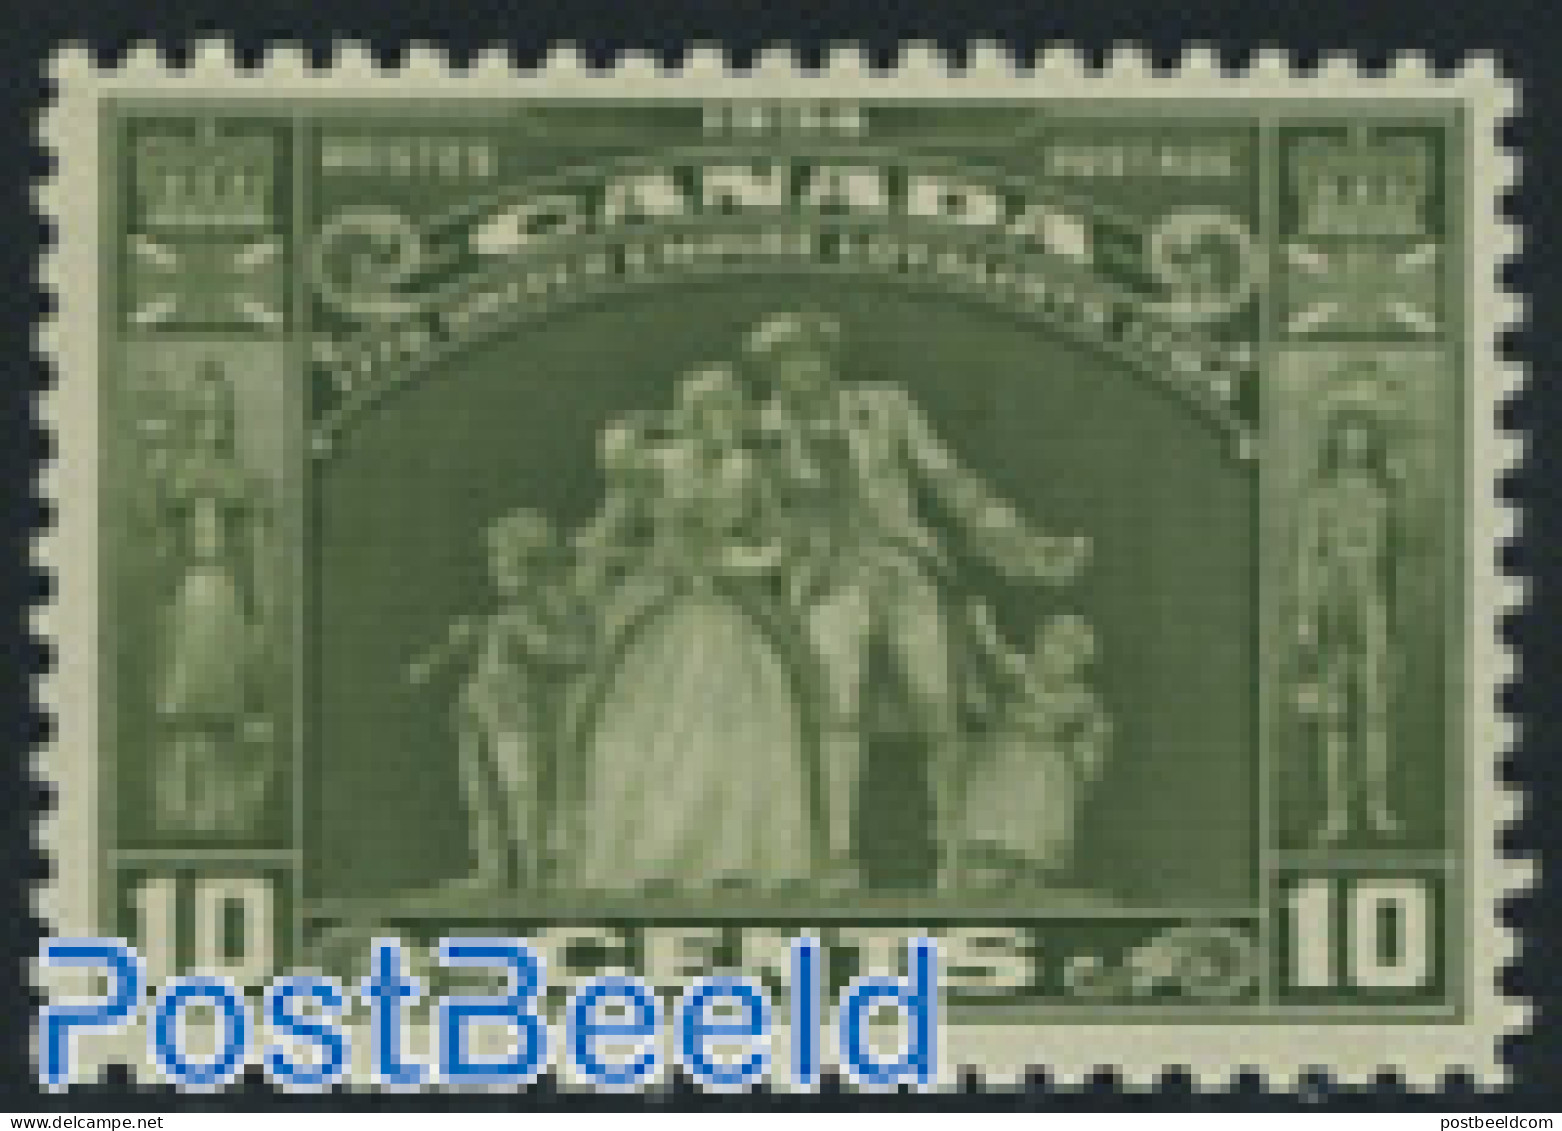 Canada 1934 United Empire Loyalists 1v, Mint NH - Nuovi